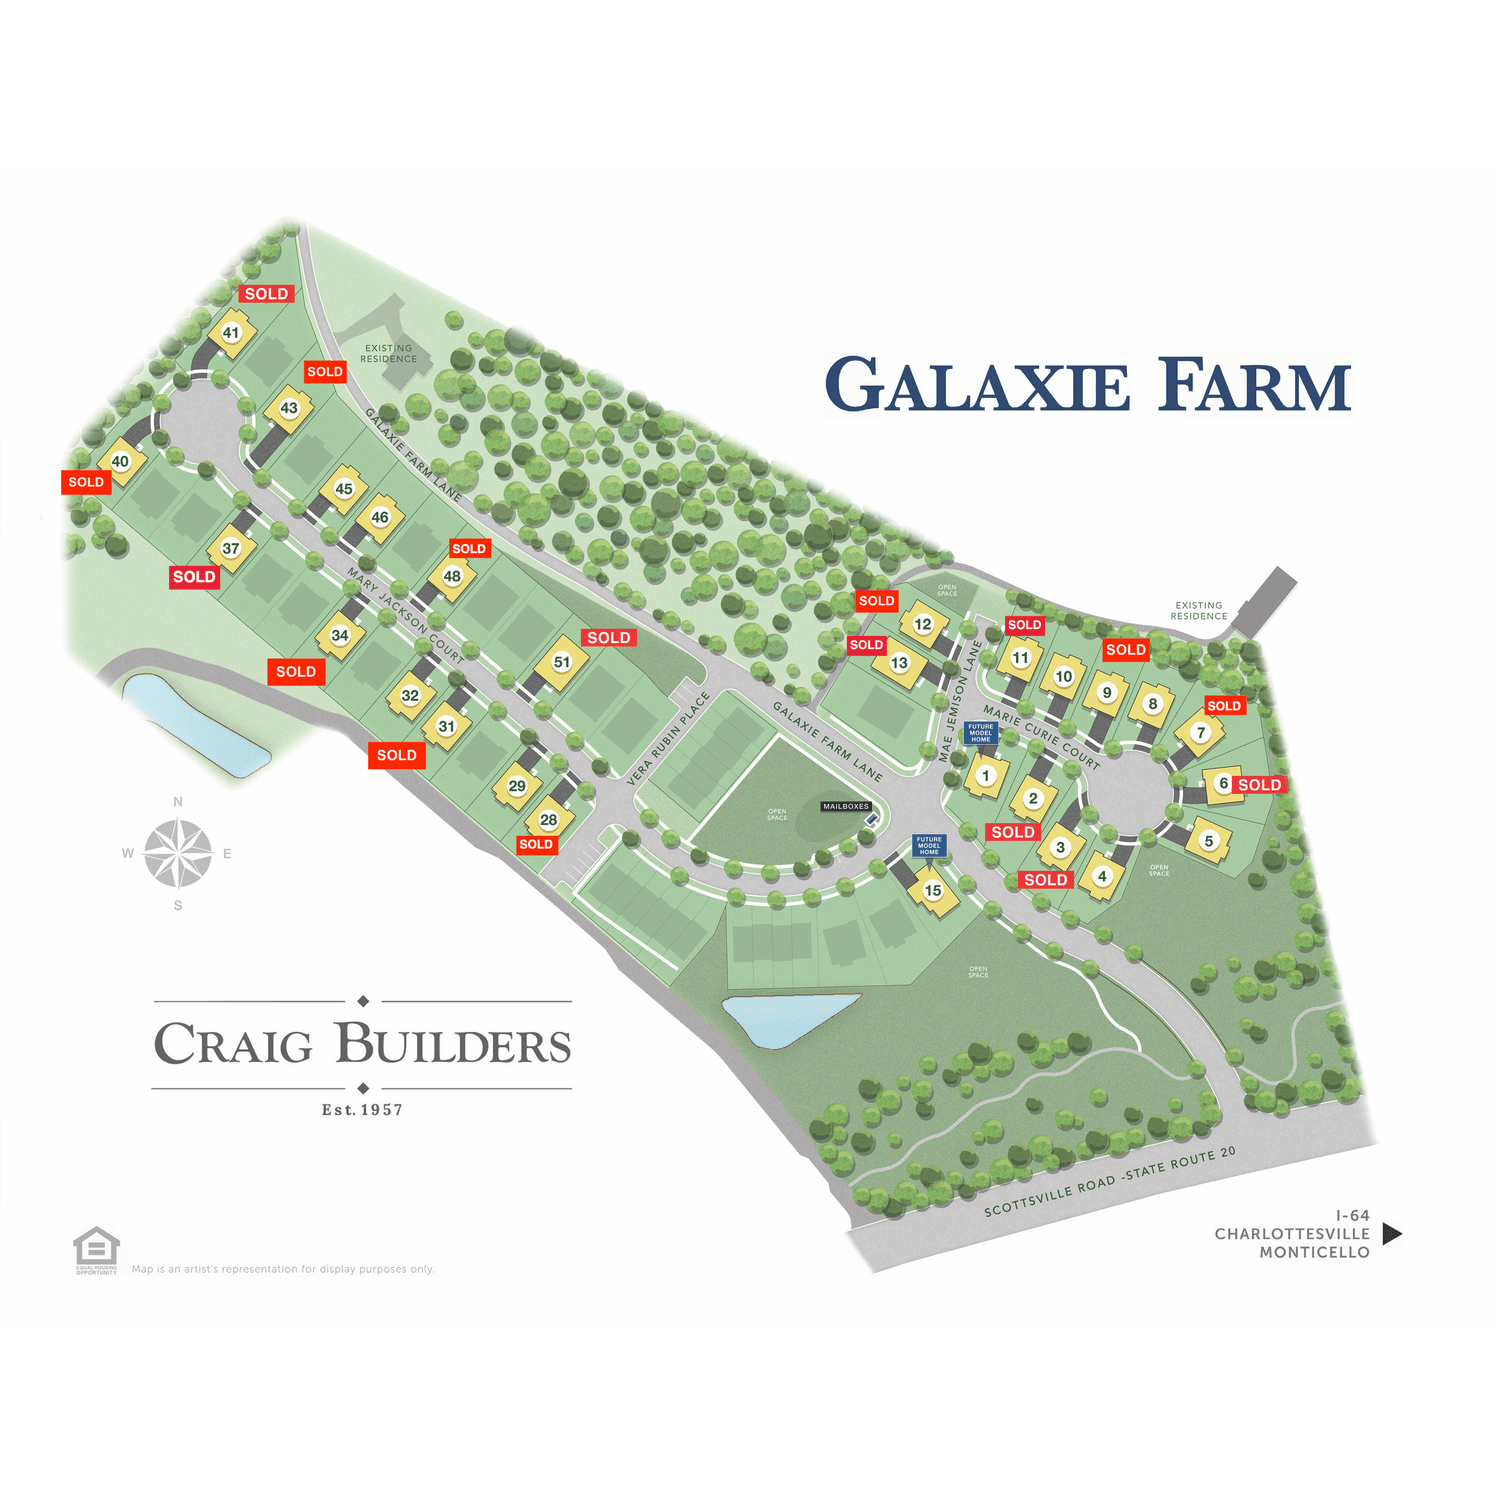 12. Galaxie Farm xây dựng tại 4006 Marie Curie Court, Charlottesville, VA 22902